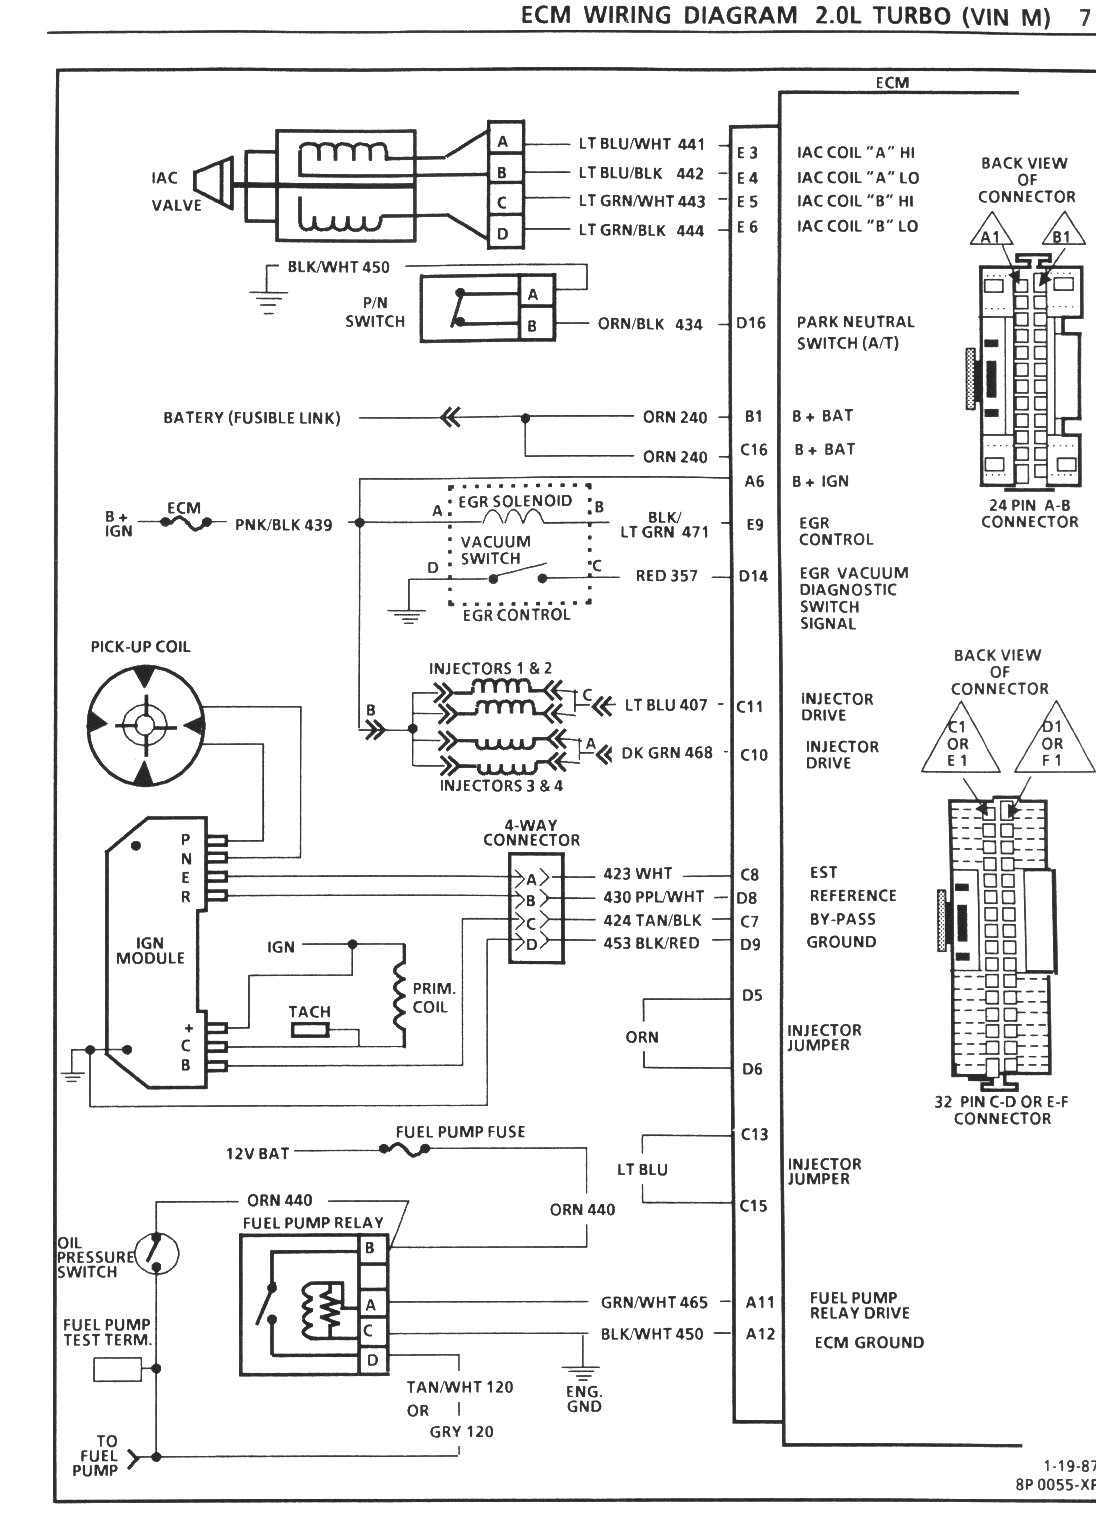 sel detroit 60 ecm wiring diagram wiring diagram local detroit diesel 60 ecm wiring diagram wiring